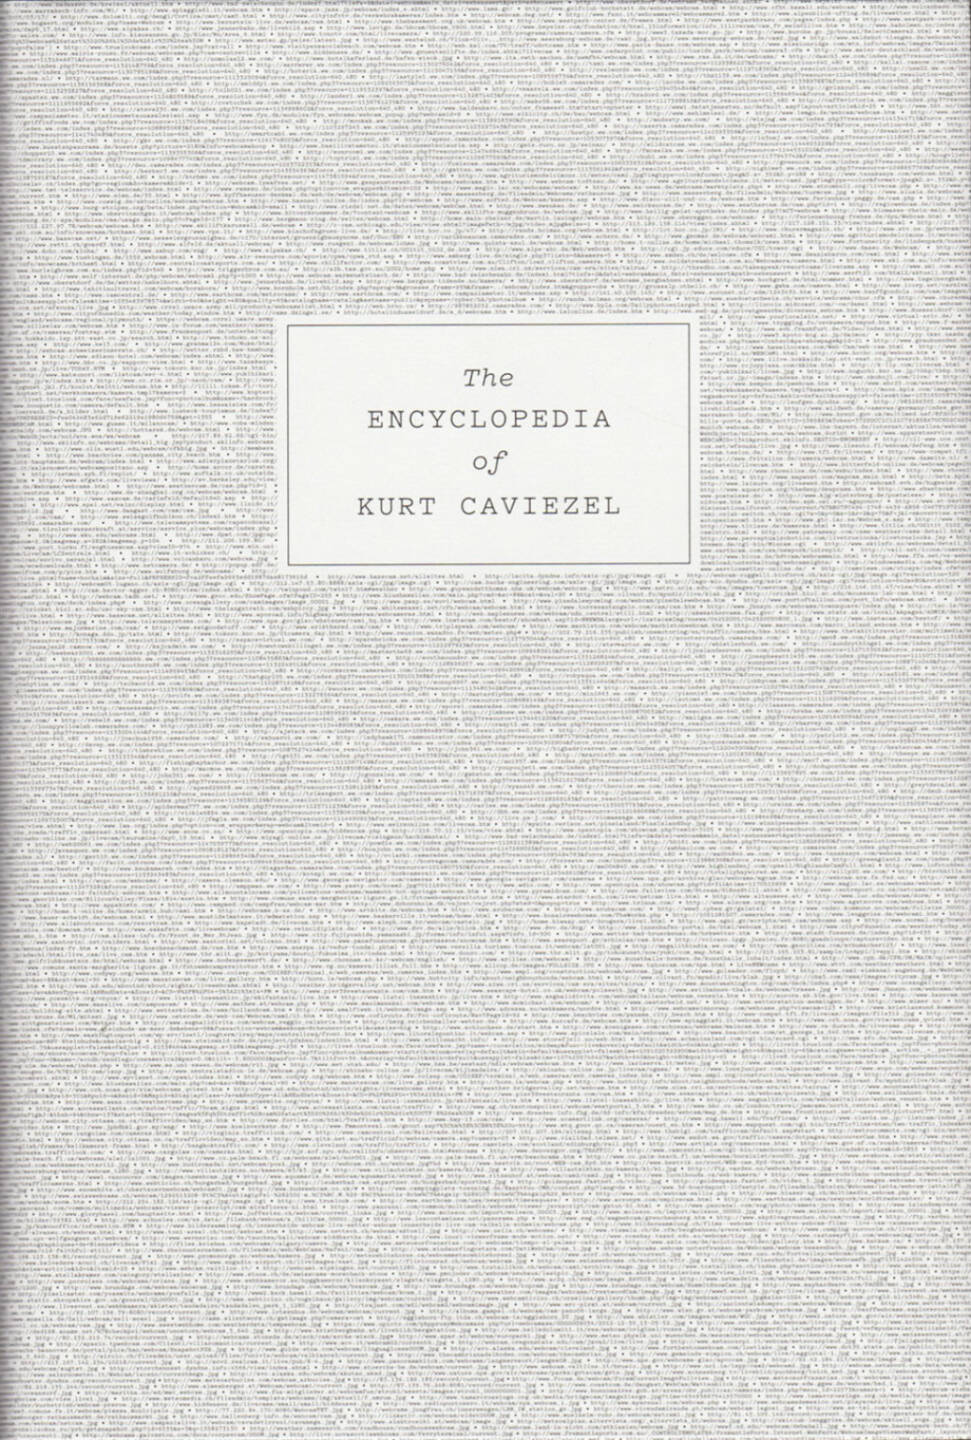 Kurt Caviezel - The Encyclopedia of Kurt Caviezel, Rorhof 2015, Cover - http://josefchladek.com/book/kurt_caviezel_-_the_encyclopedia_of_kurt_caviezel